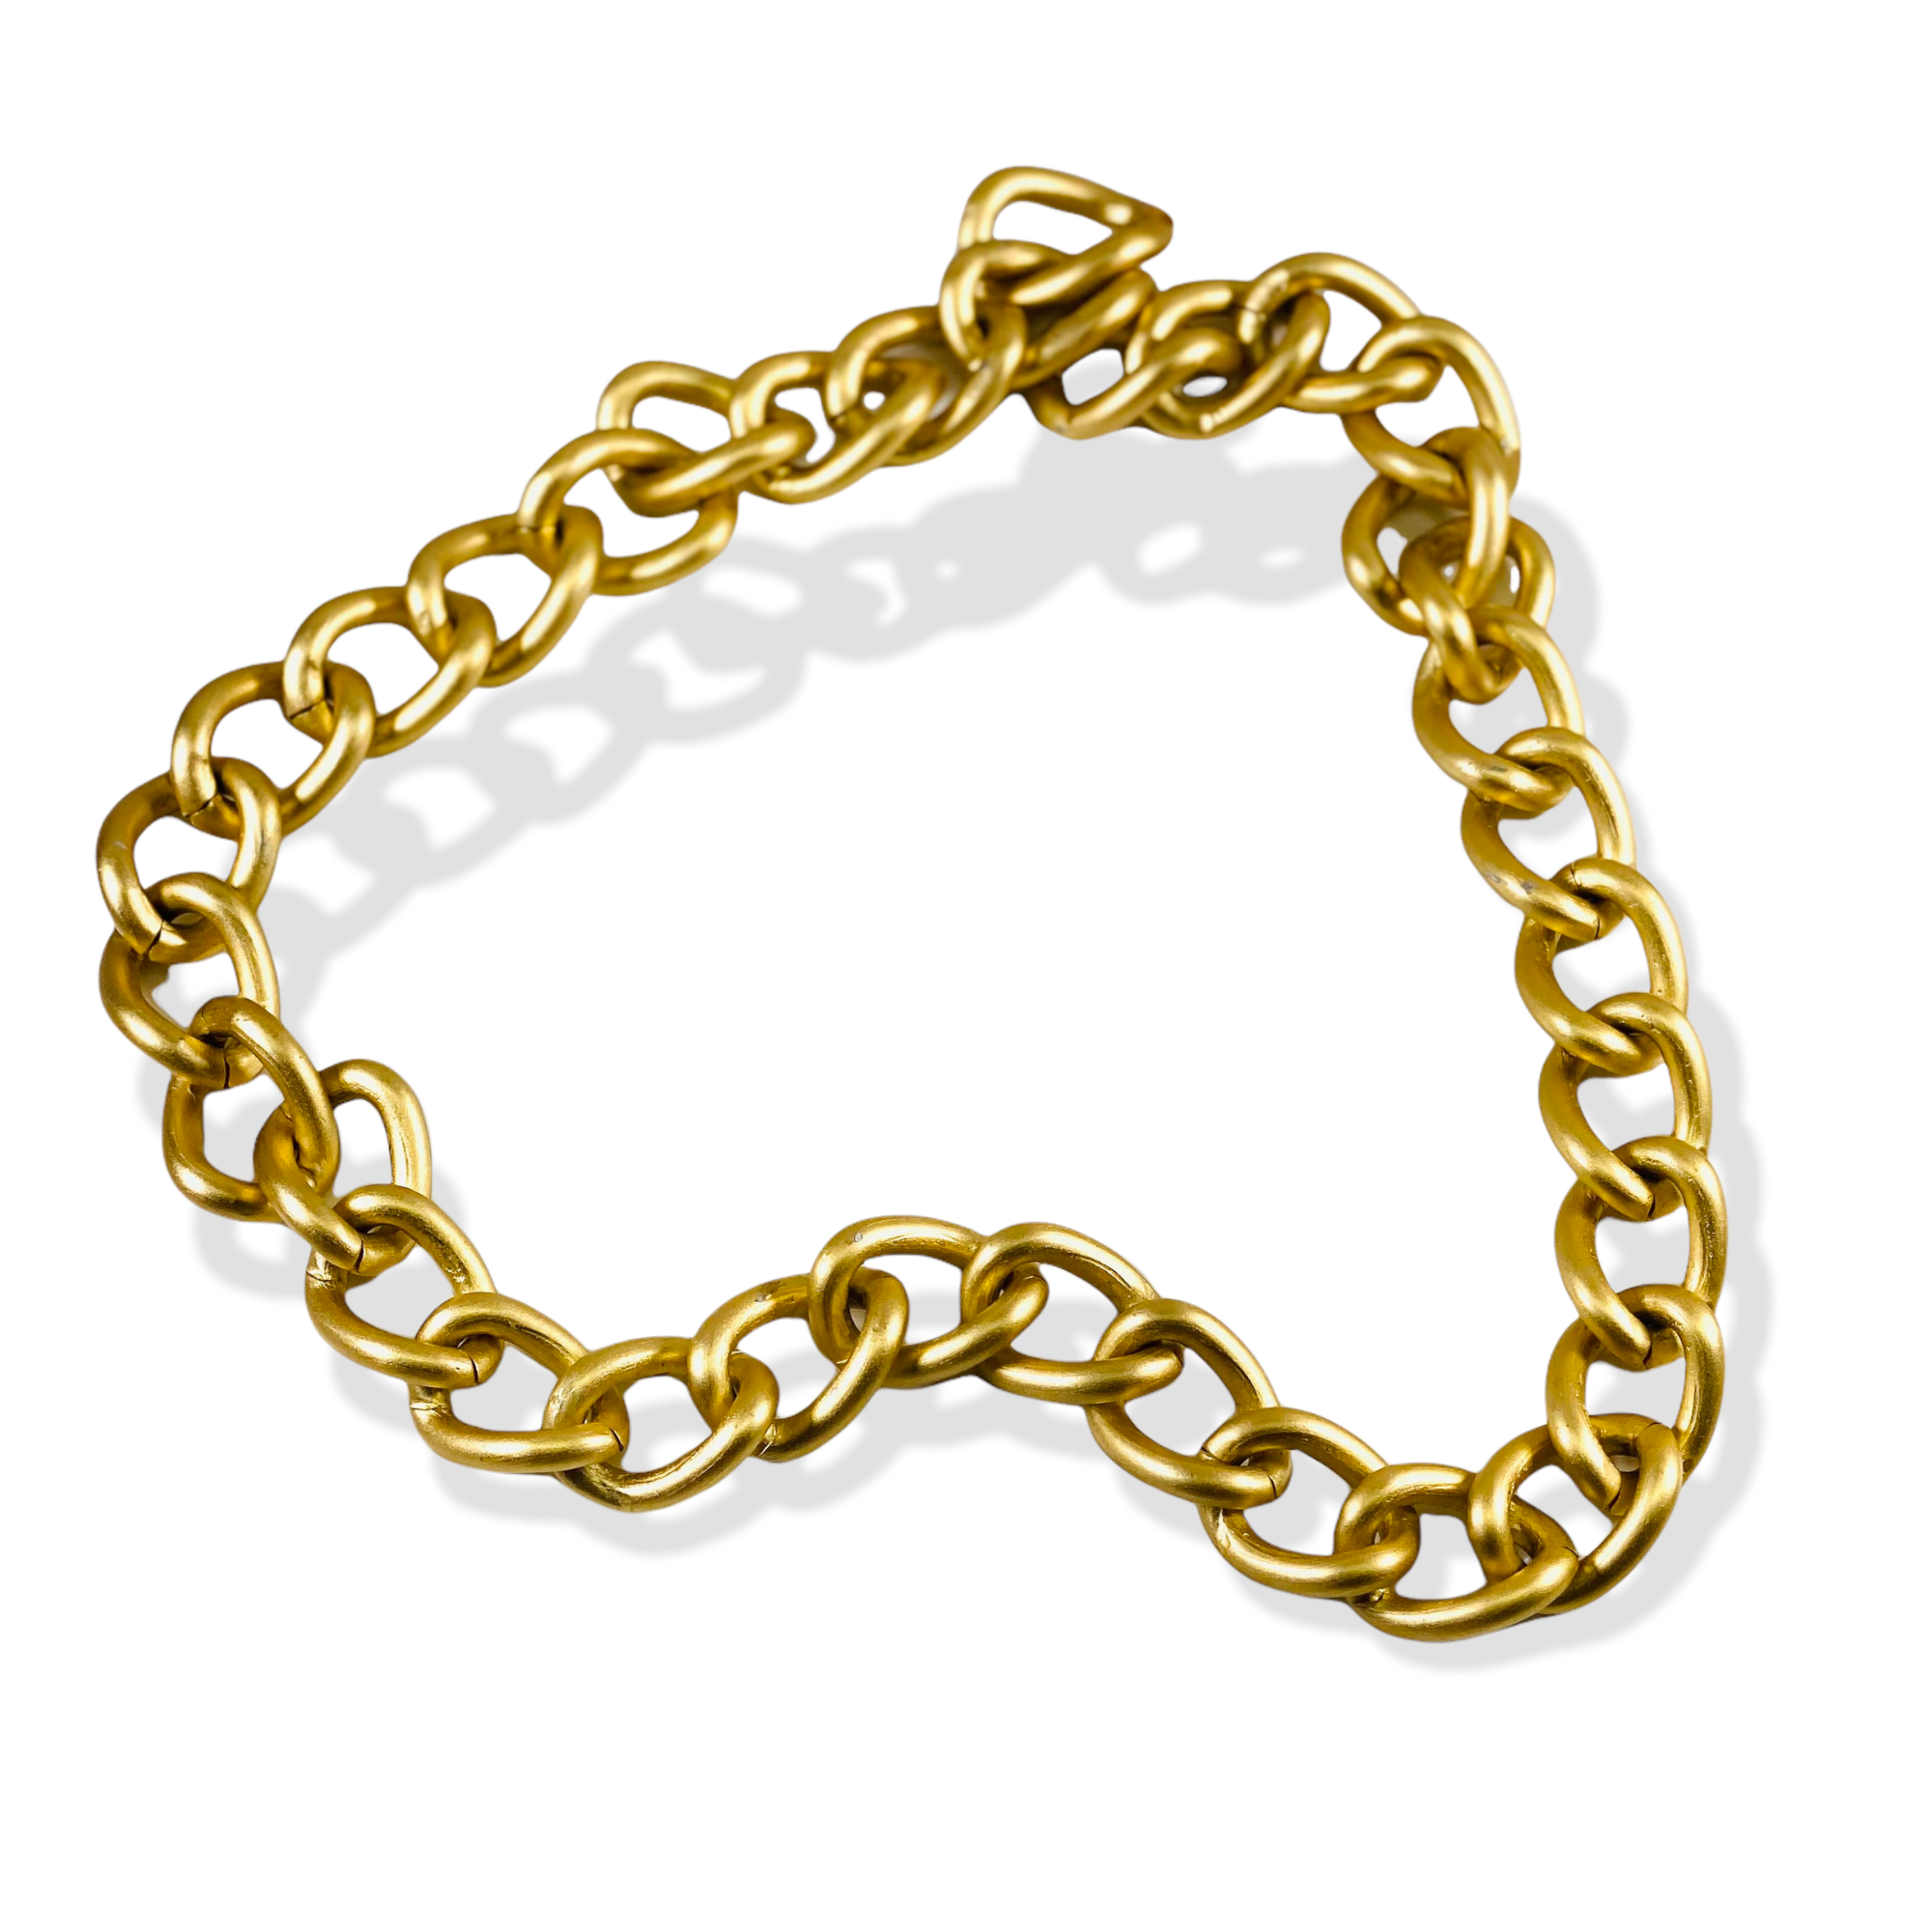 Men’s gold curb chain